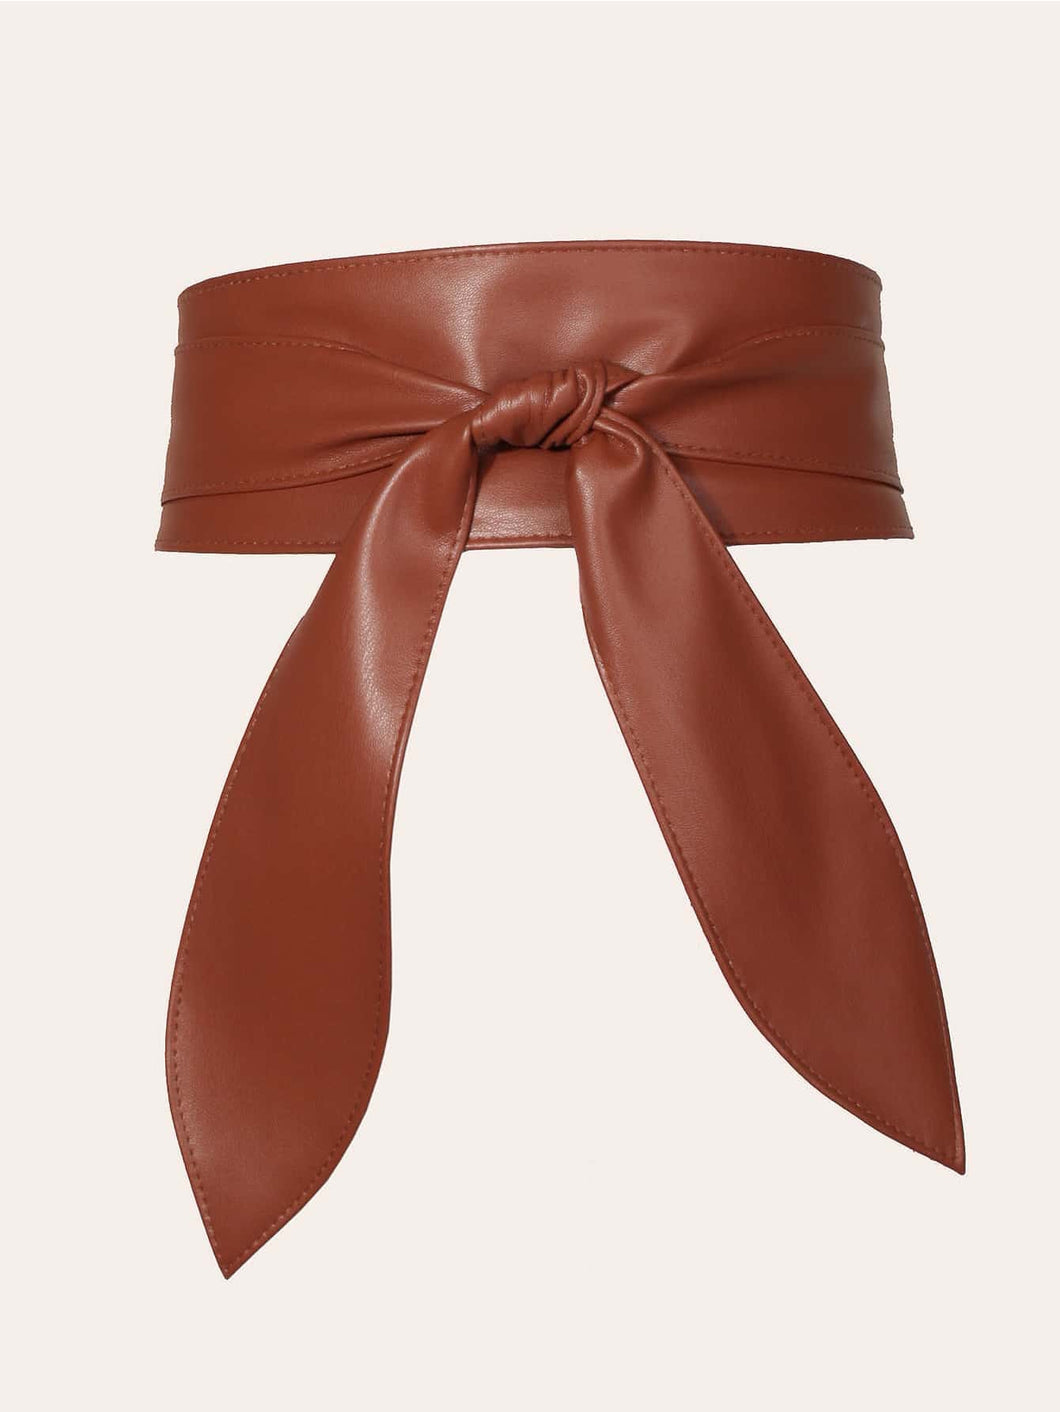 Chocolate Brown Belt